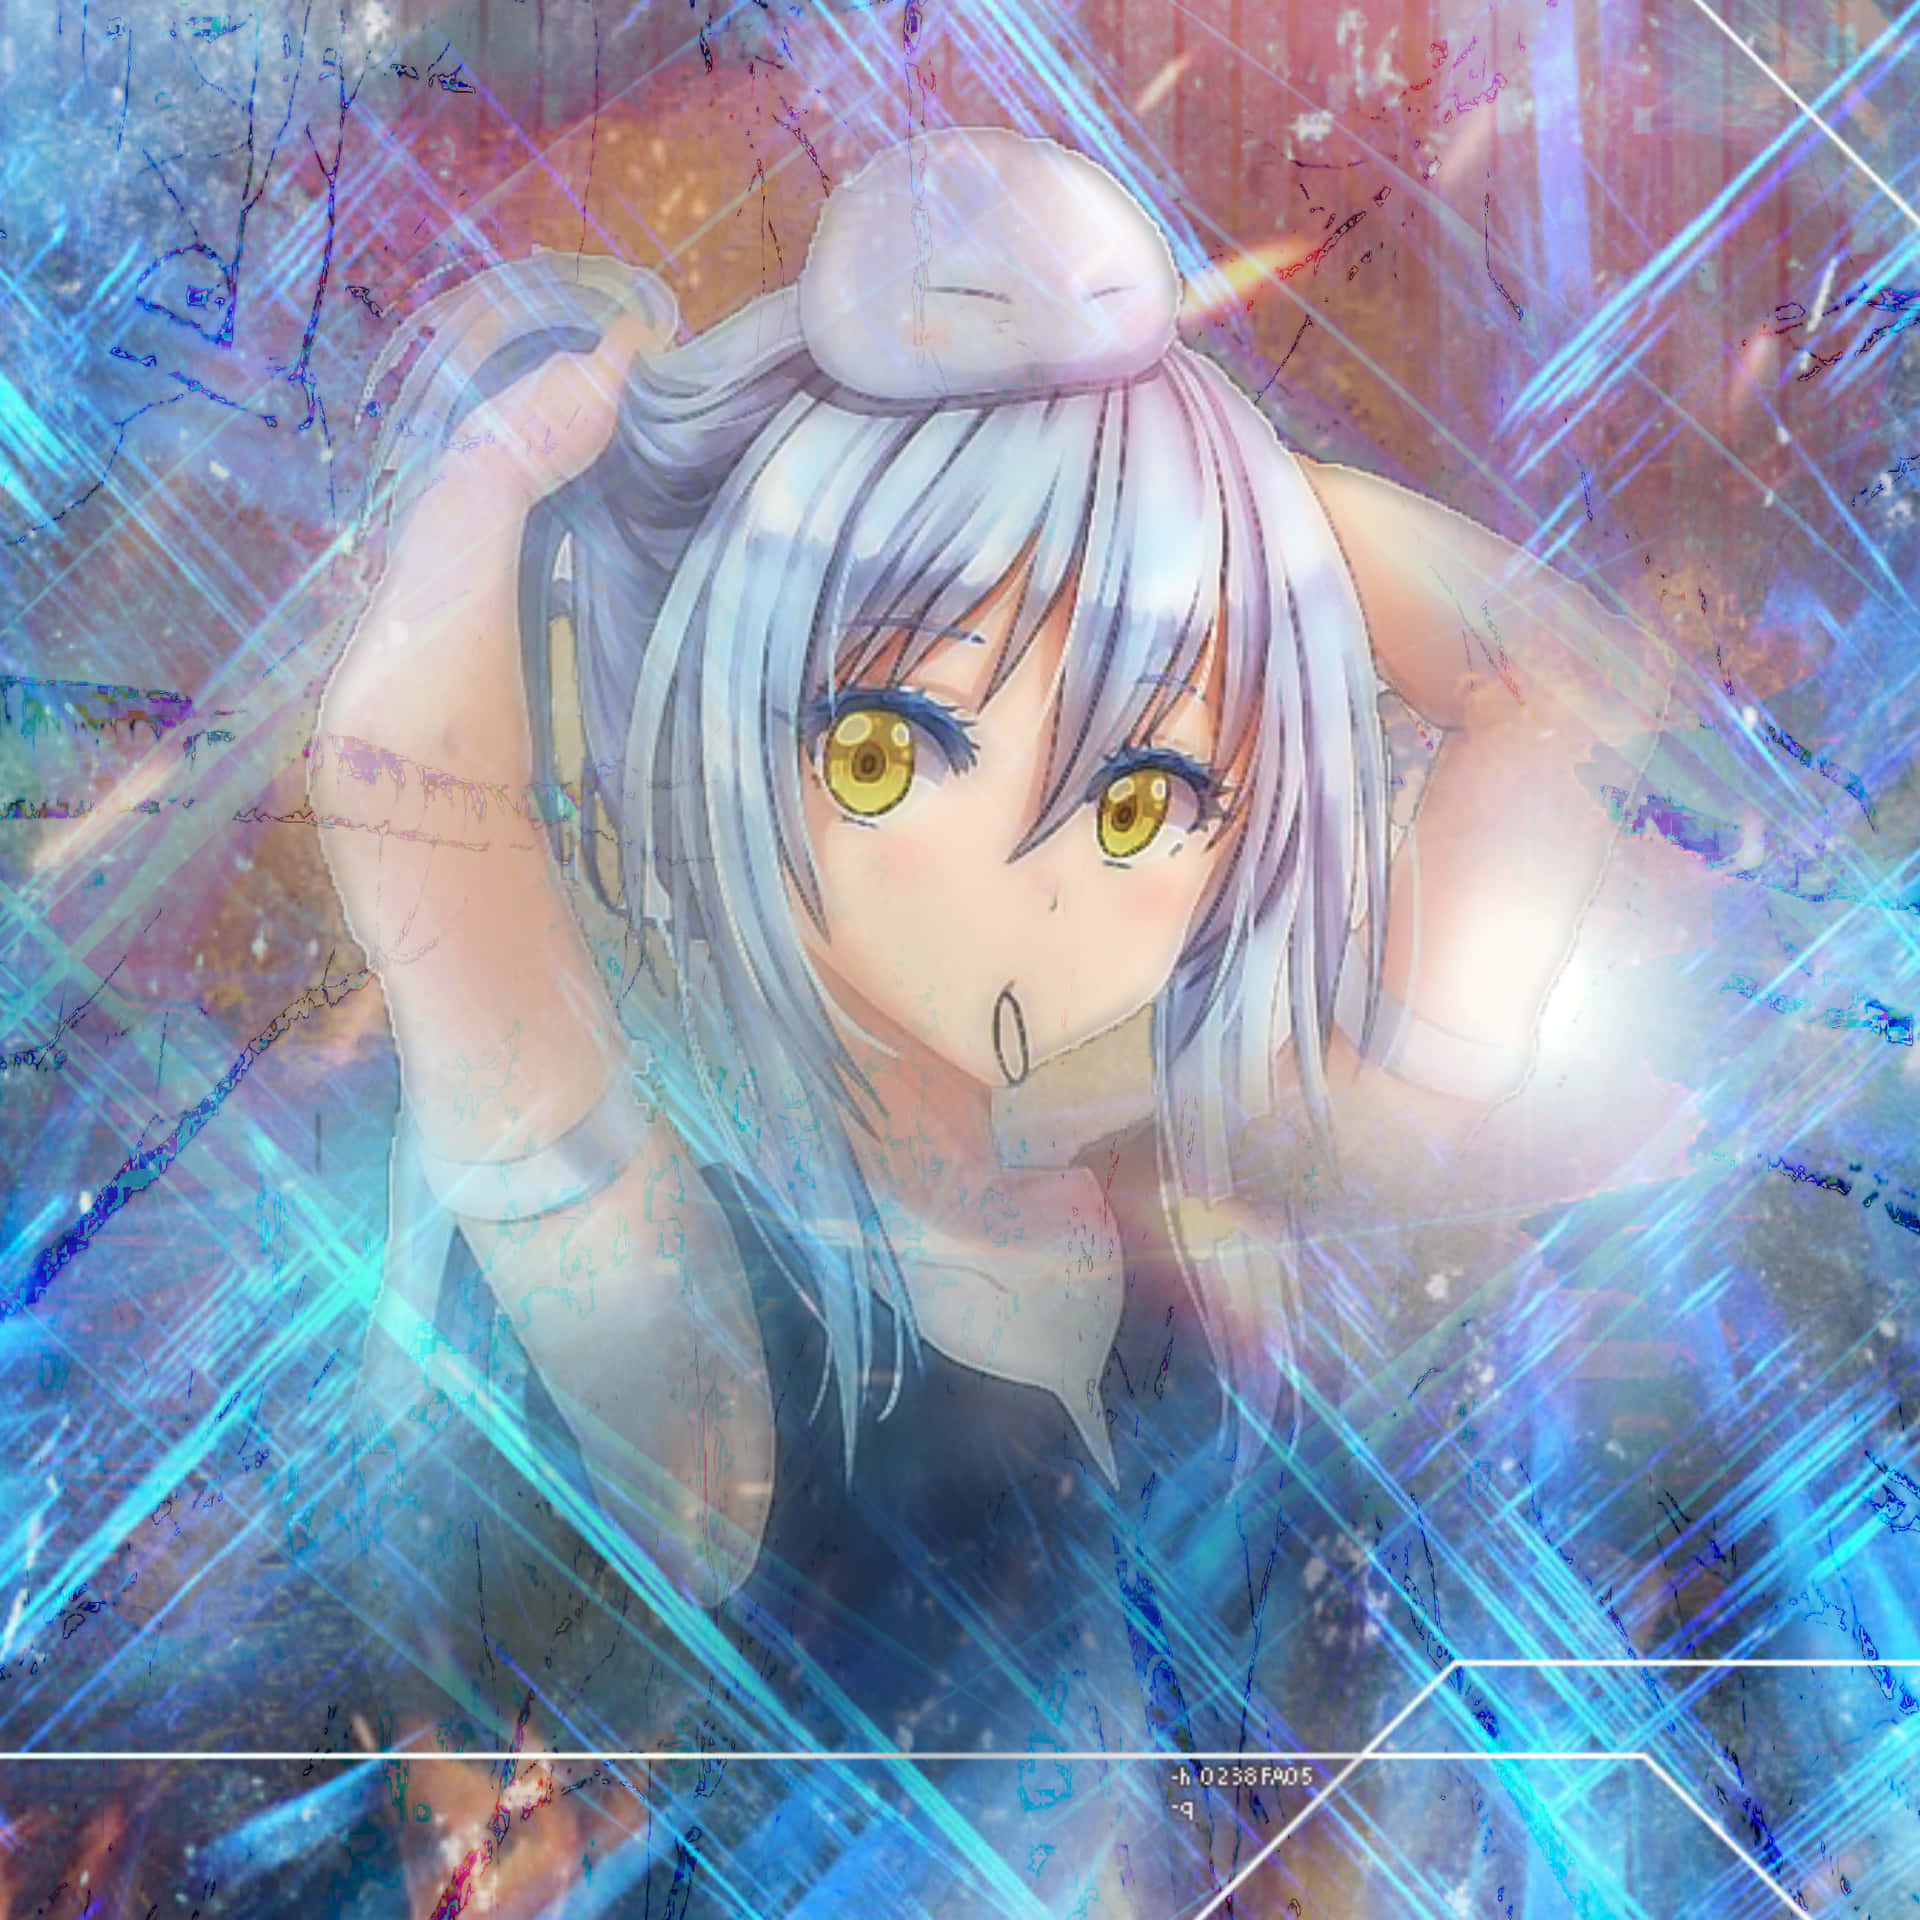 Rimuru Pfp With Blue Sparkles Background